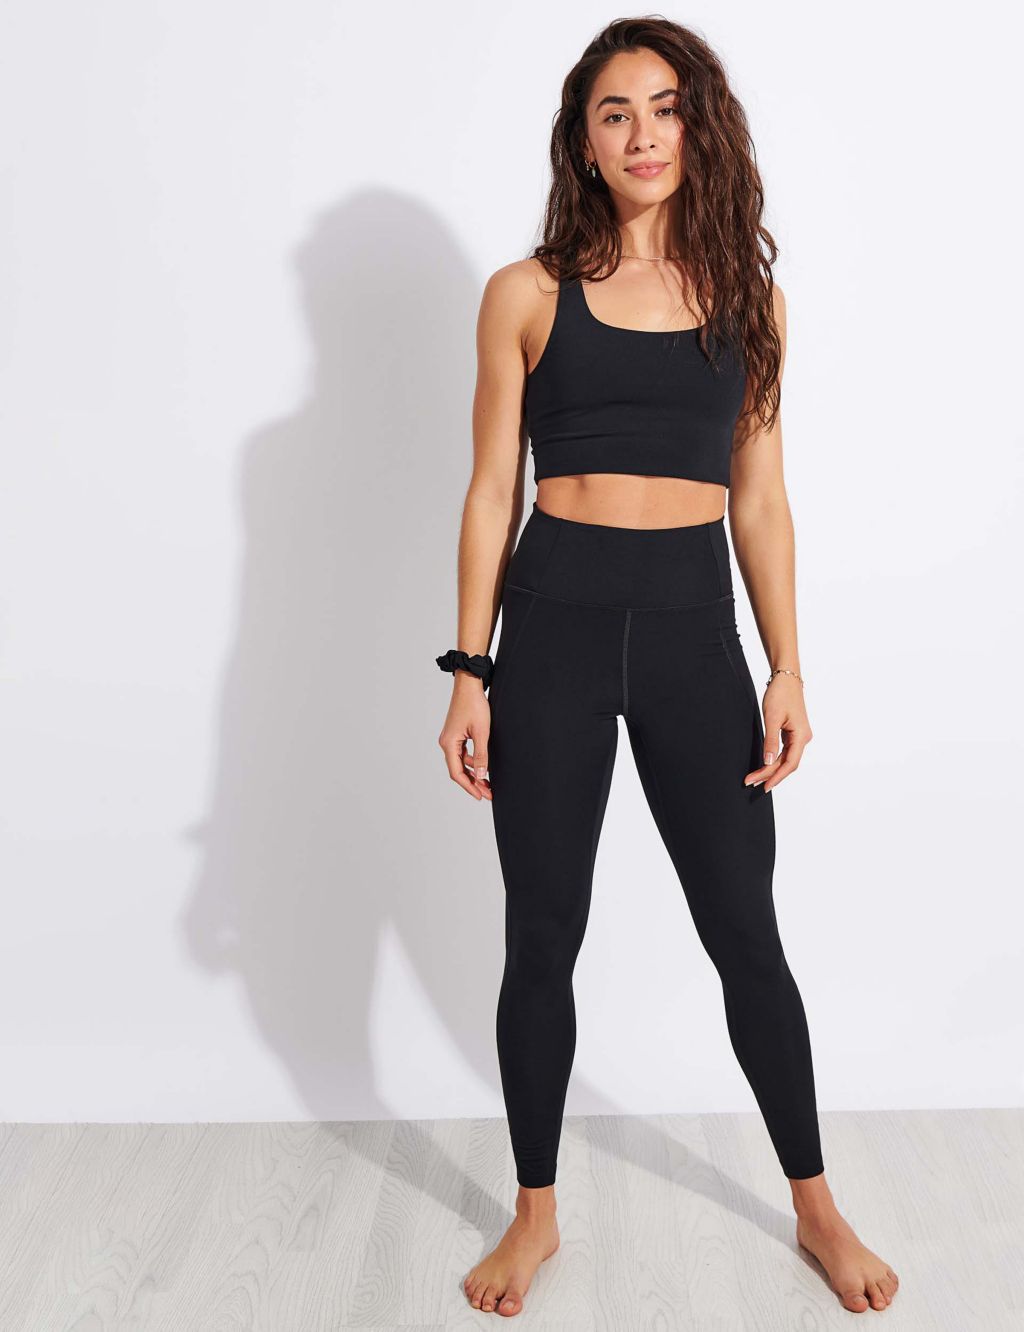 Girlfriend collective high rise compressive pocket legging - Athletic  apparel